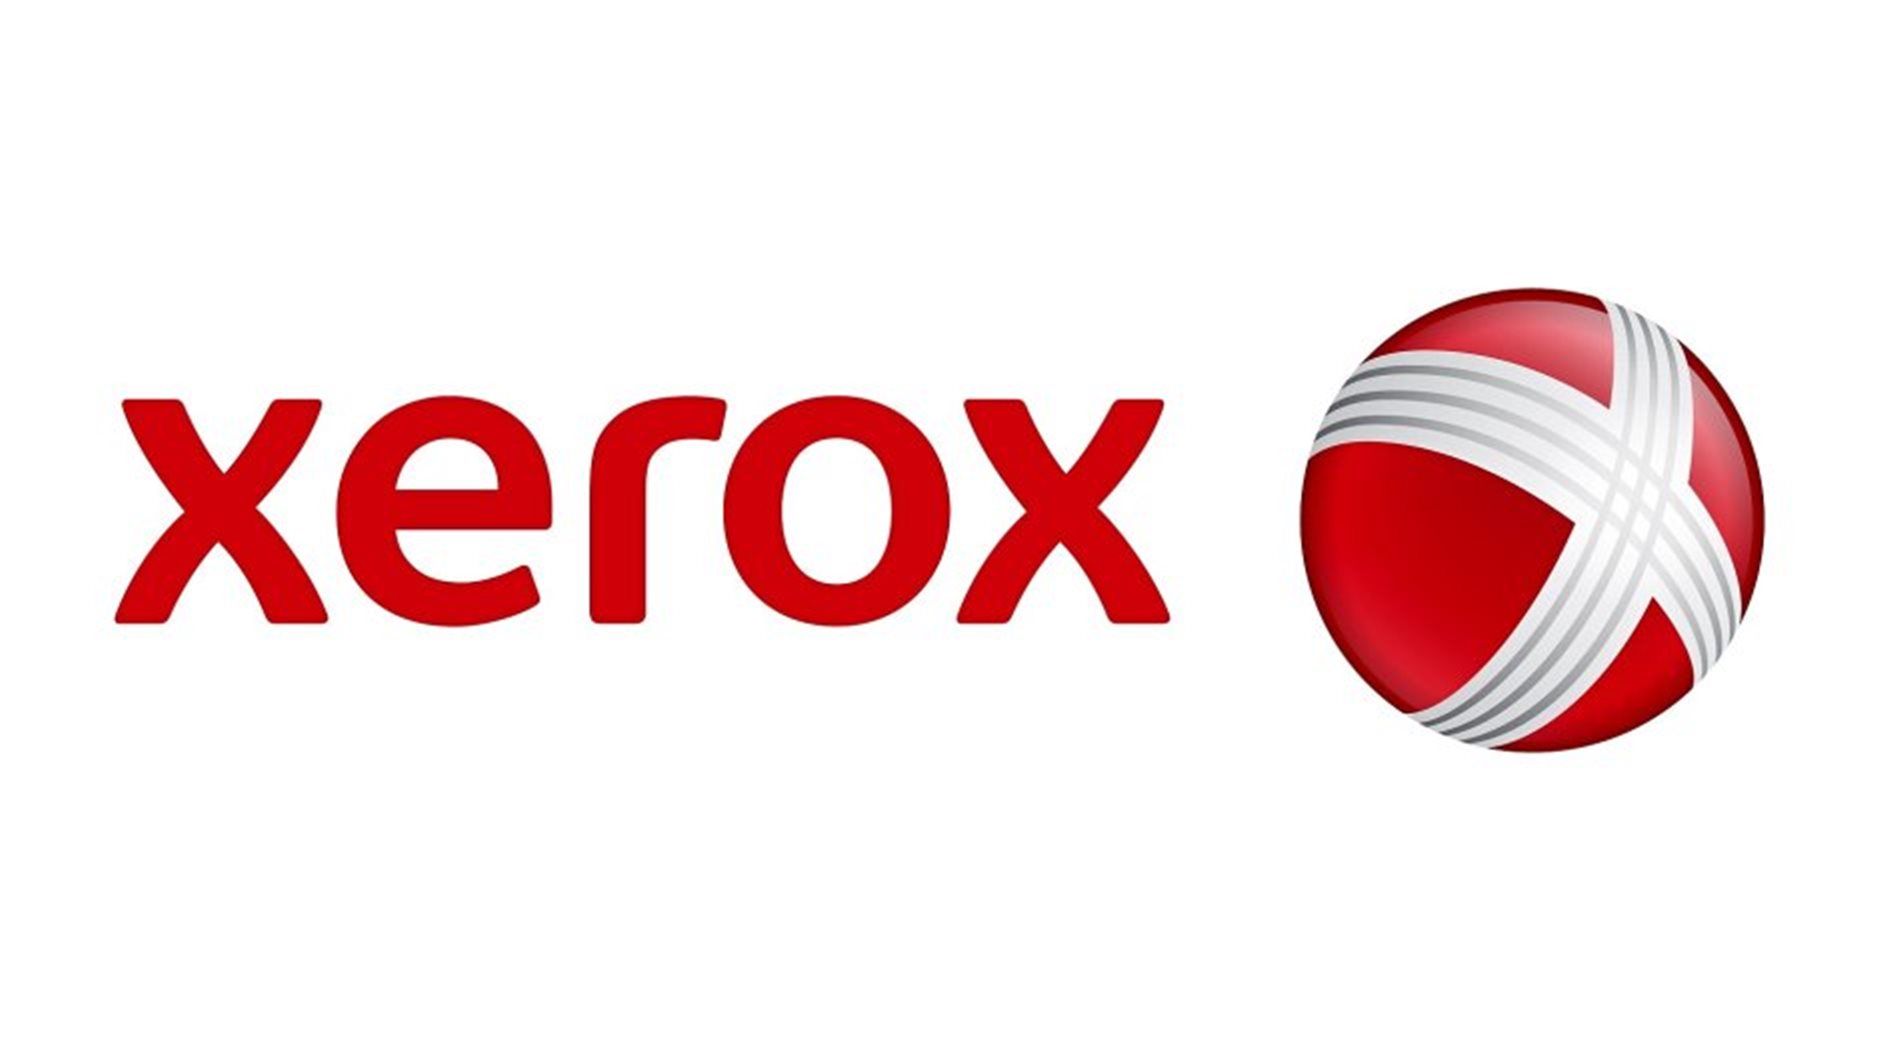 Xerox A4 Short Edge Feed (High Capacity Feeder)